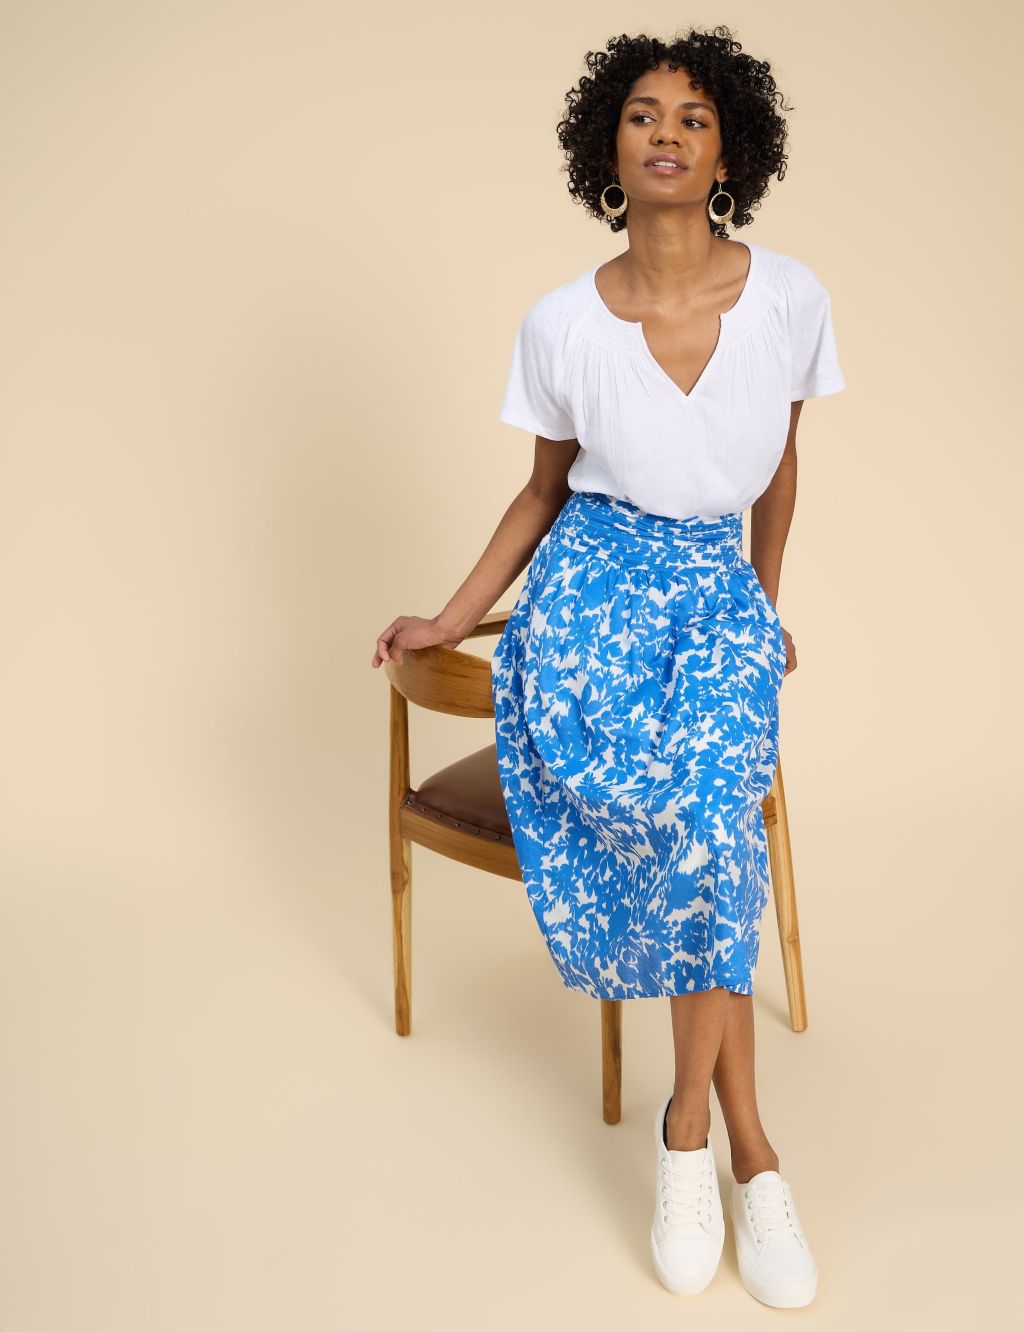 Cotton Rich Floral Midi A-Line Skirt 3 of 6